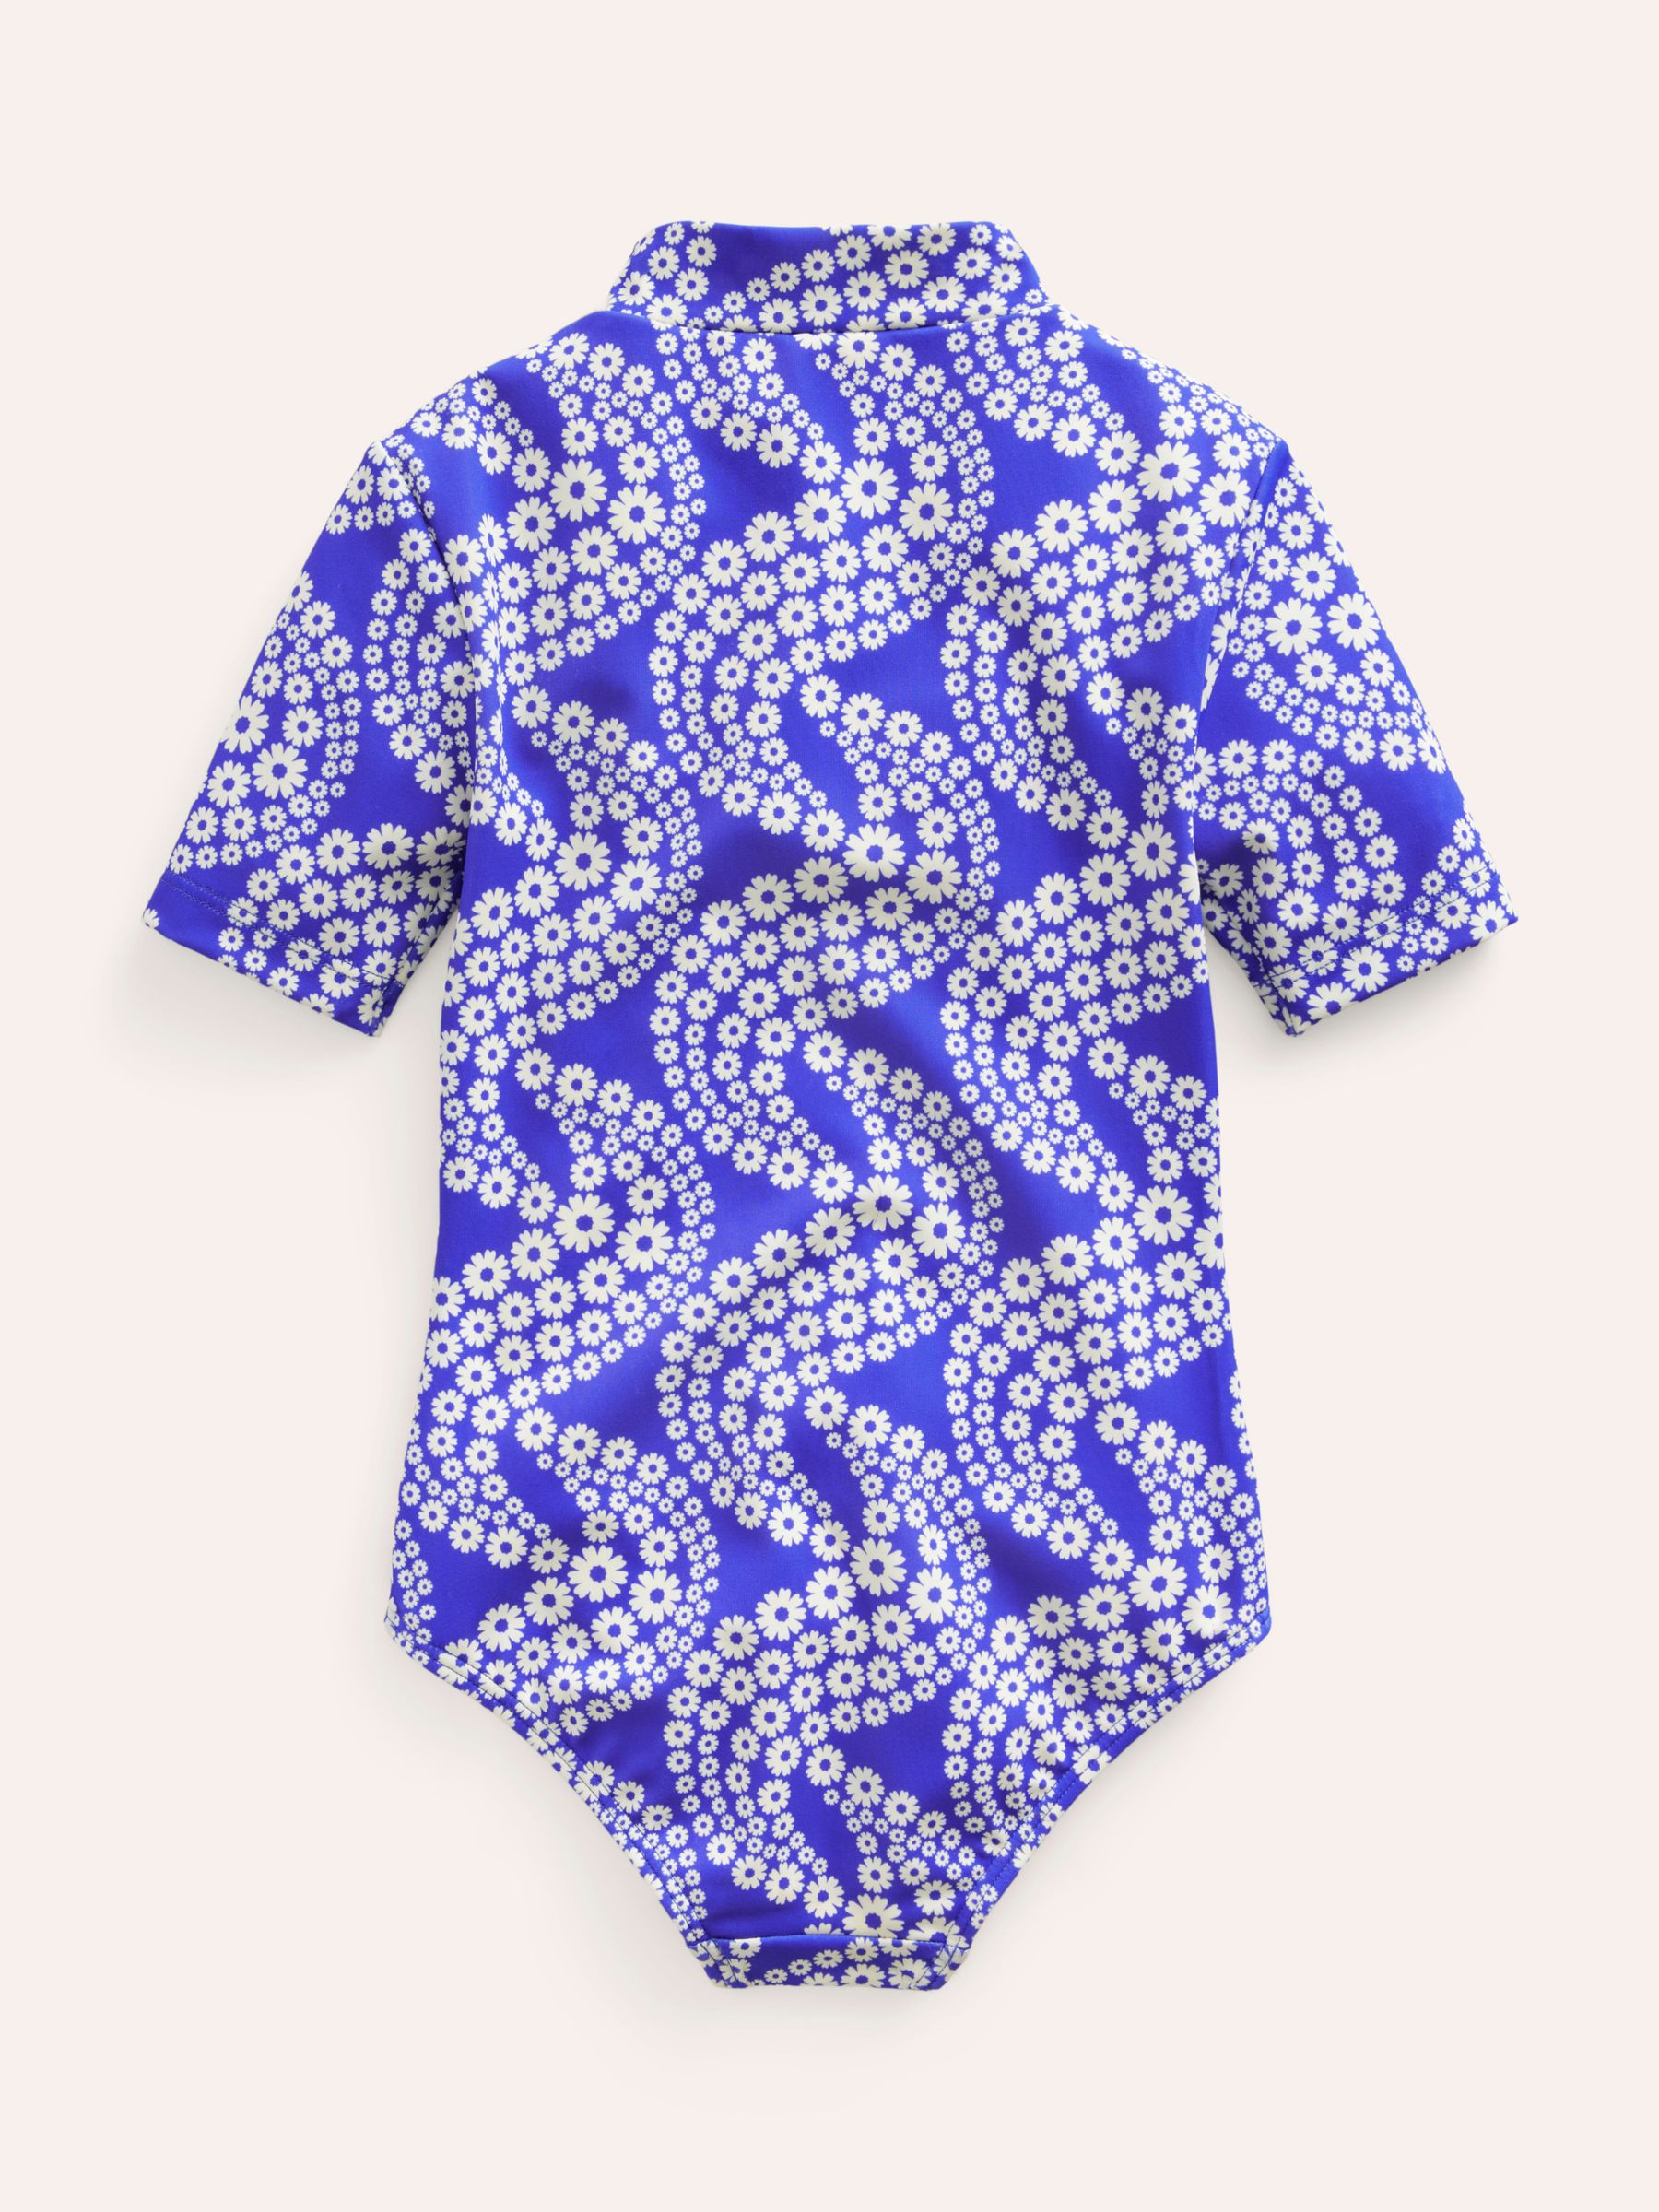 Mini Boden Kids' Floral Wave Print Short Sleeve Swimsuit, Blue Daisy, 2-3Y